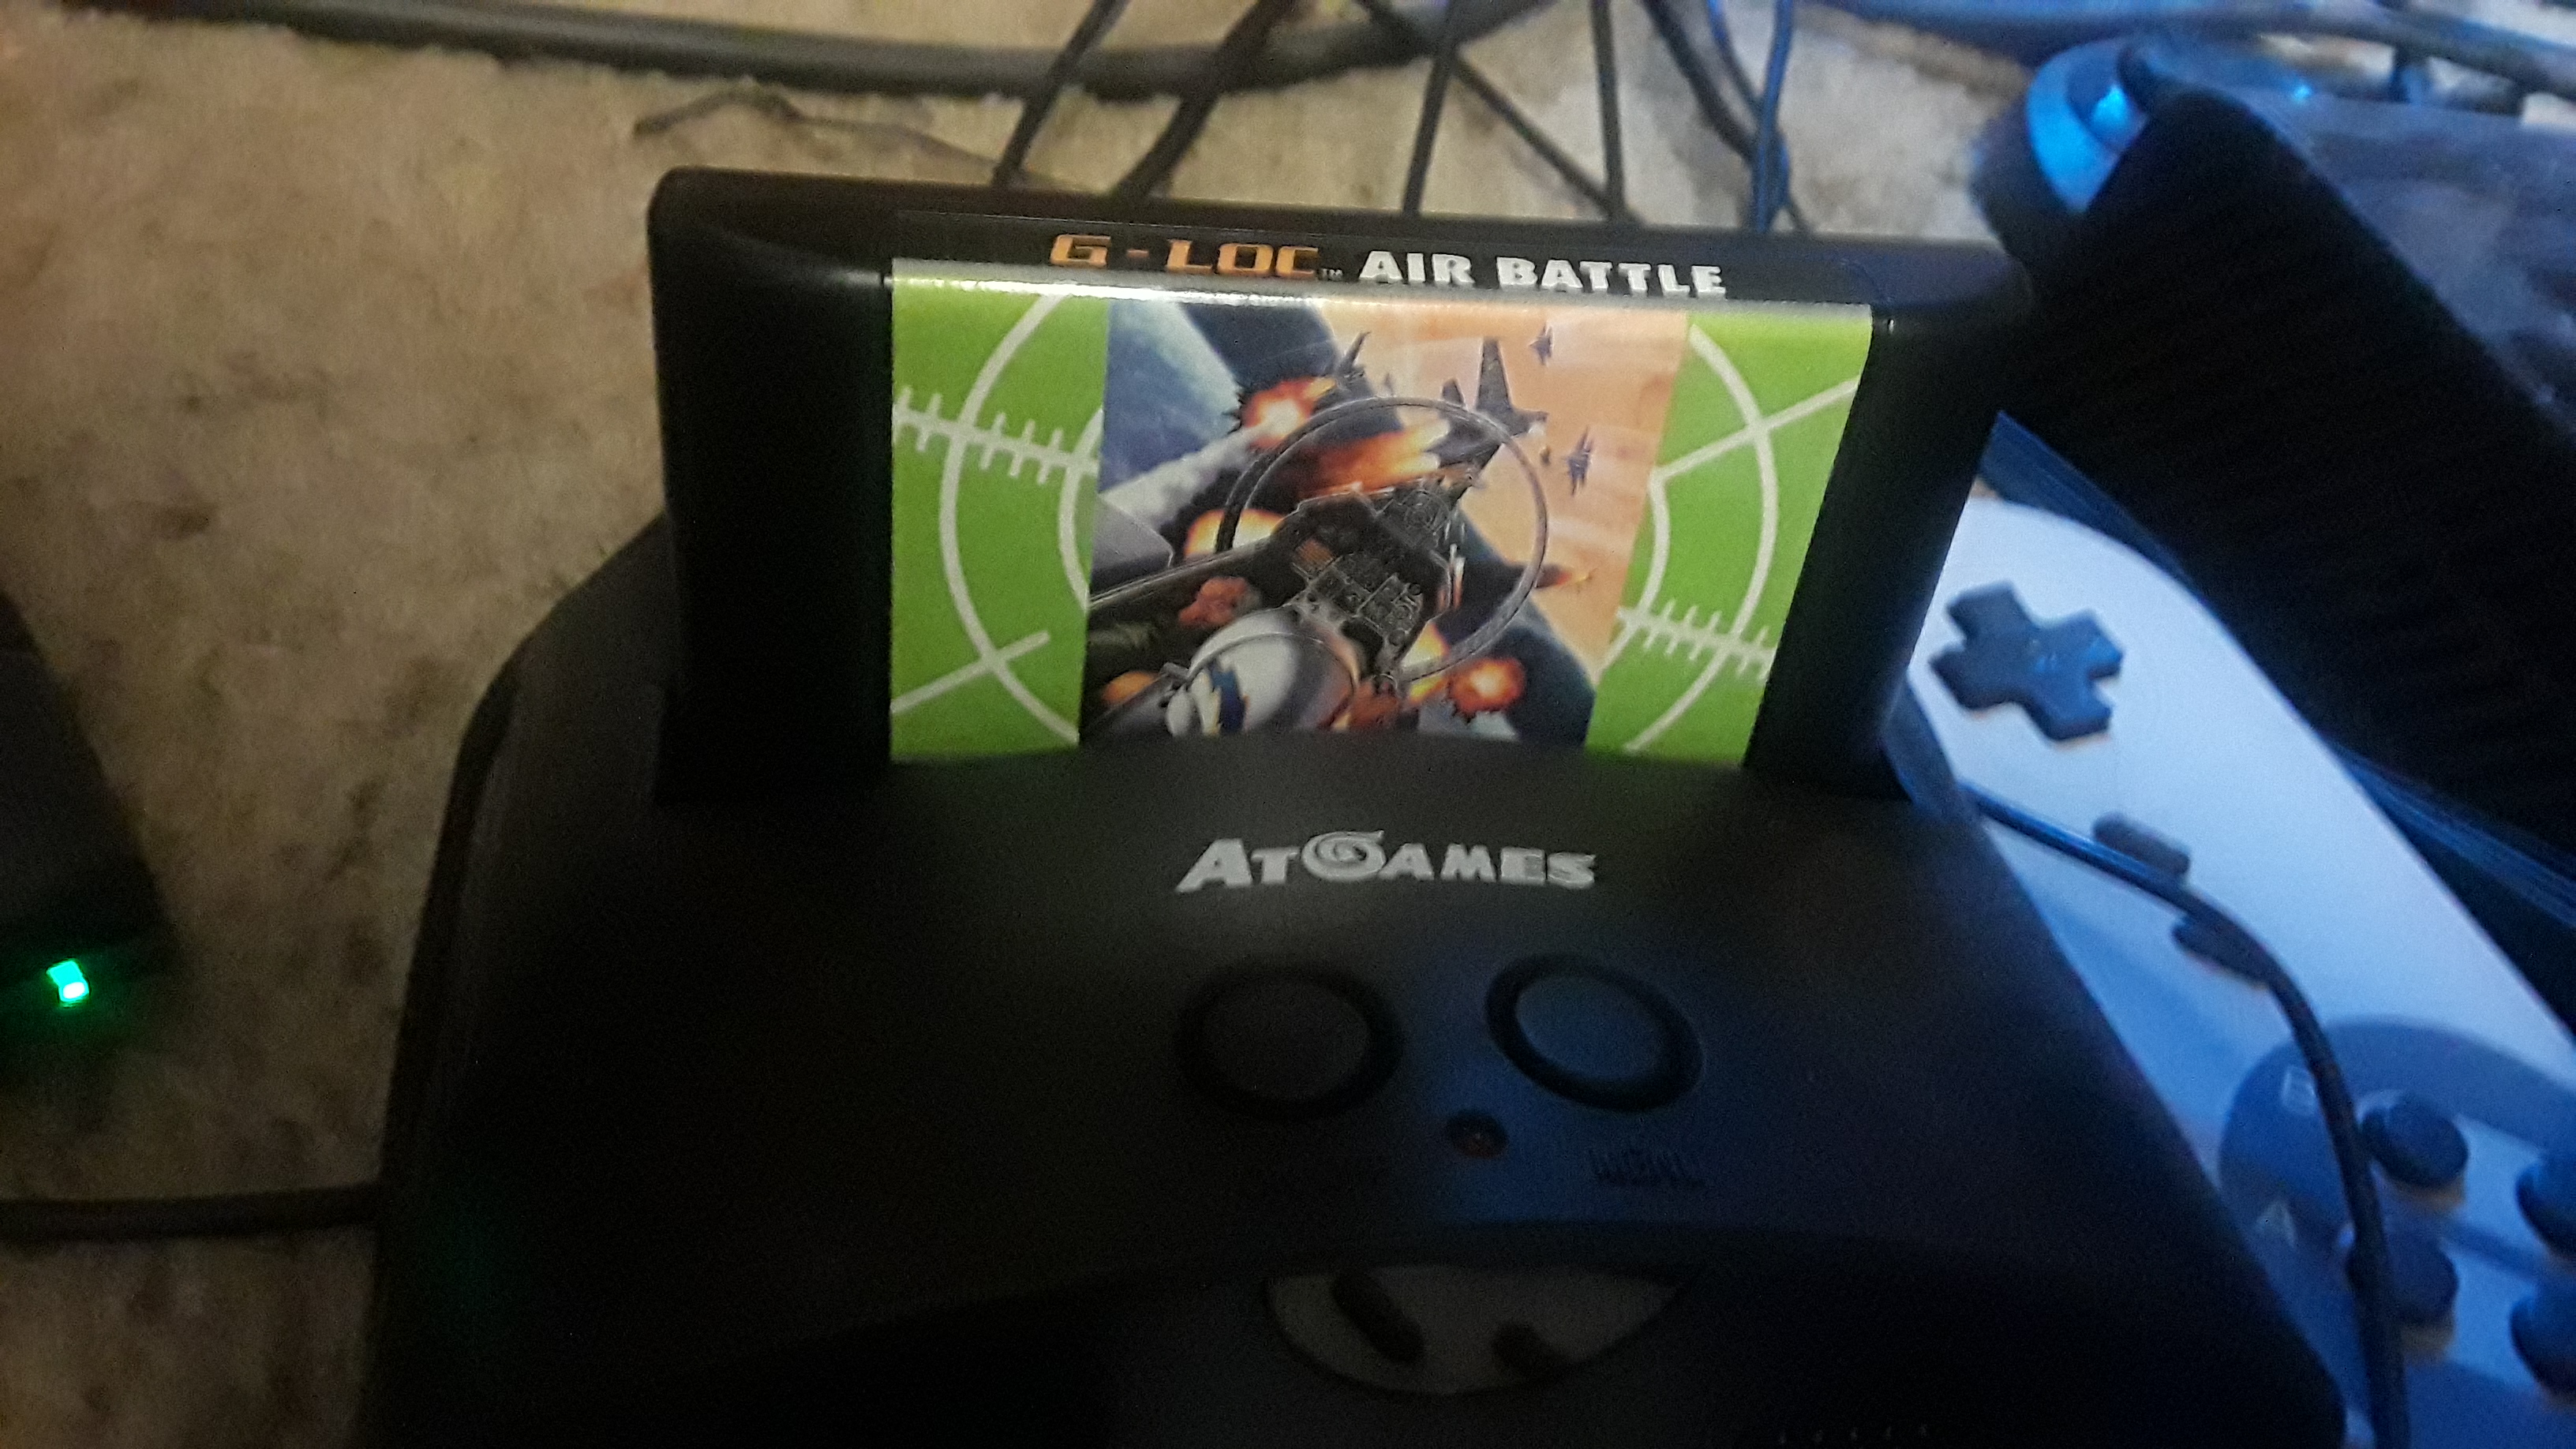 JML101582: G-LOC: Air Battle [Easy] (Sega Genesis / MegaDrive Emulated) 57,900 points on 2019-07-22 13:38:45